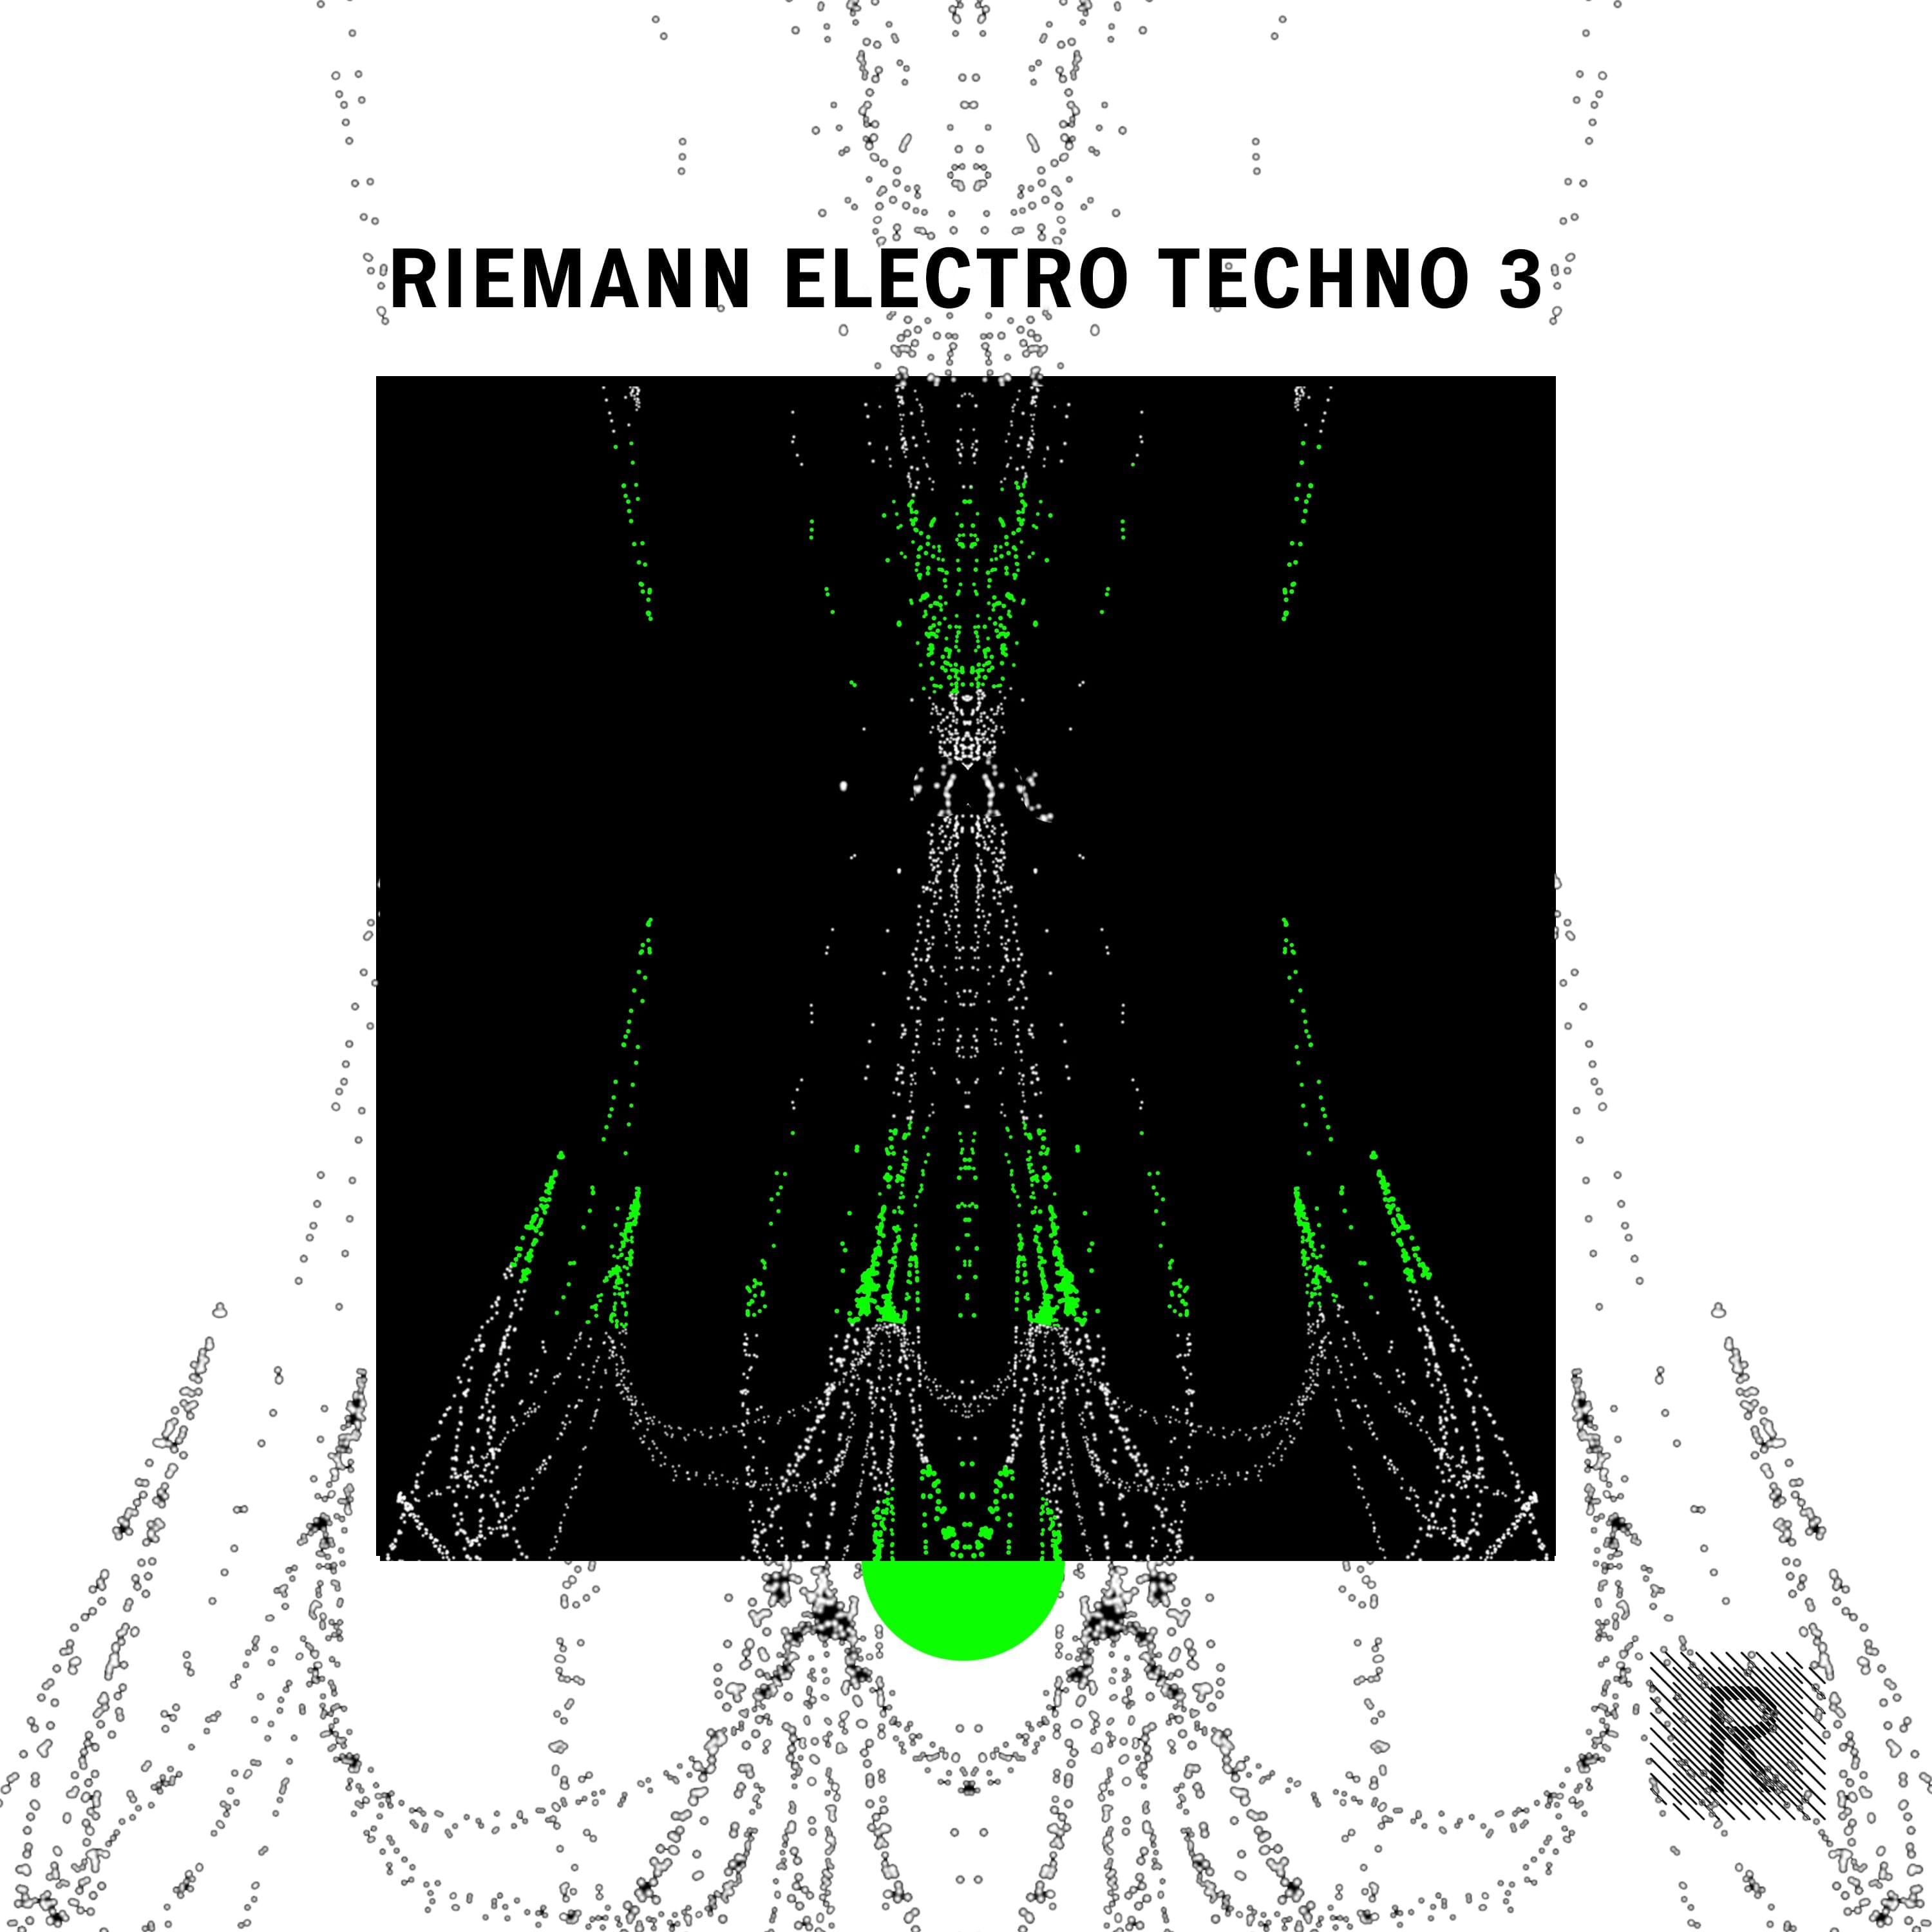 Riemann Electro Techno 3 - Electro Berlin Detroit Analog 808 (Oneshots - Loops) Sample Pack Riemann Kollektion